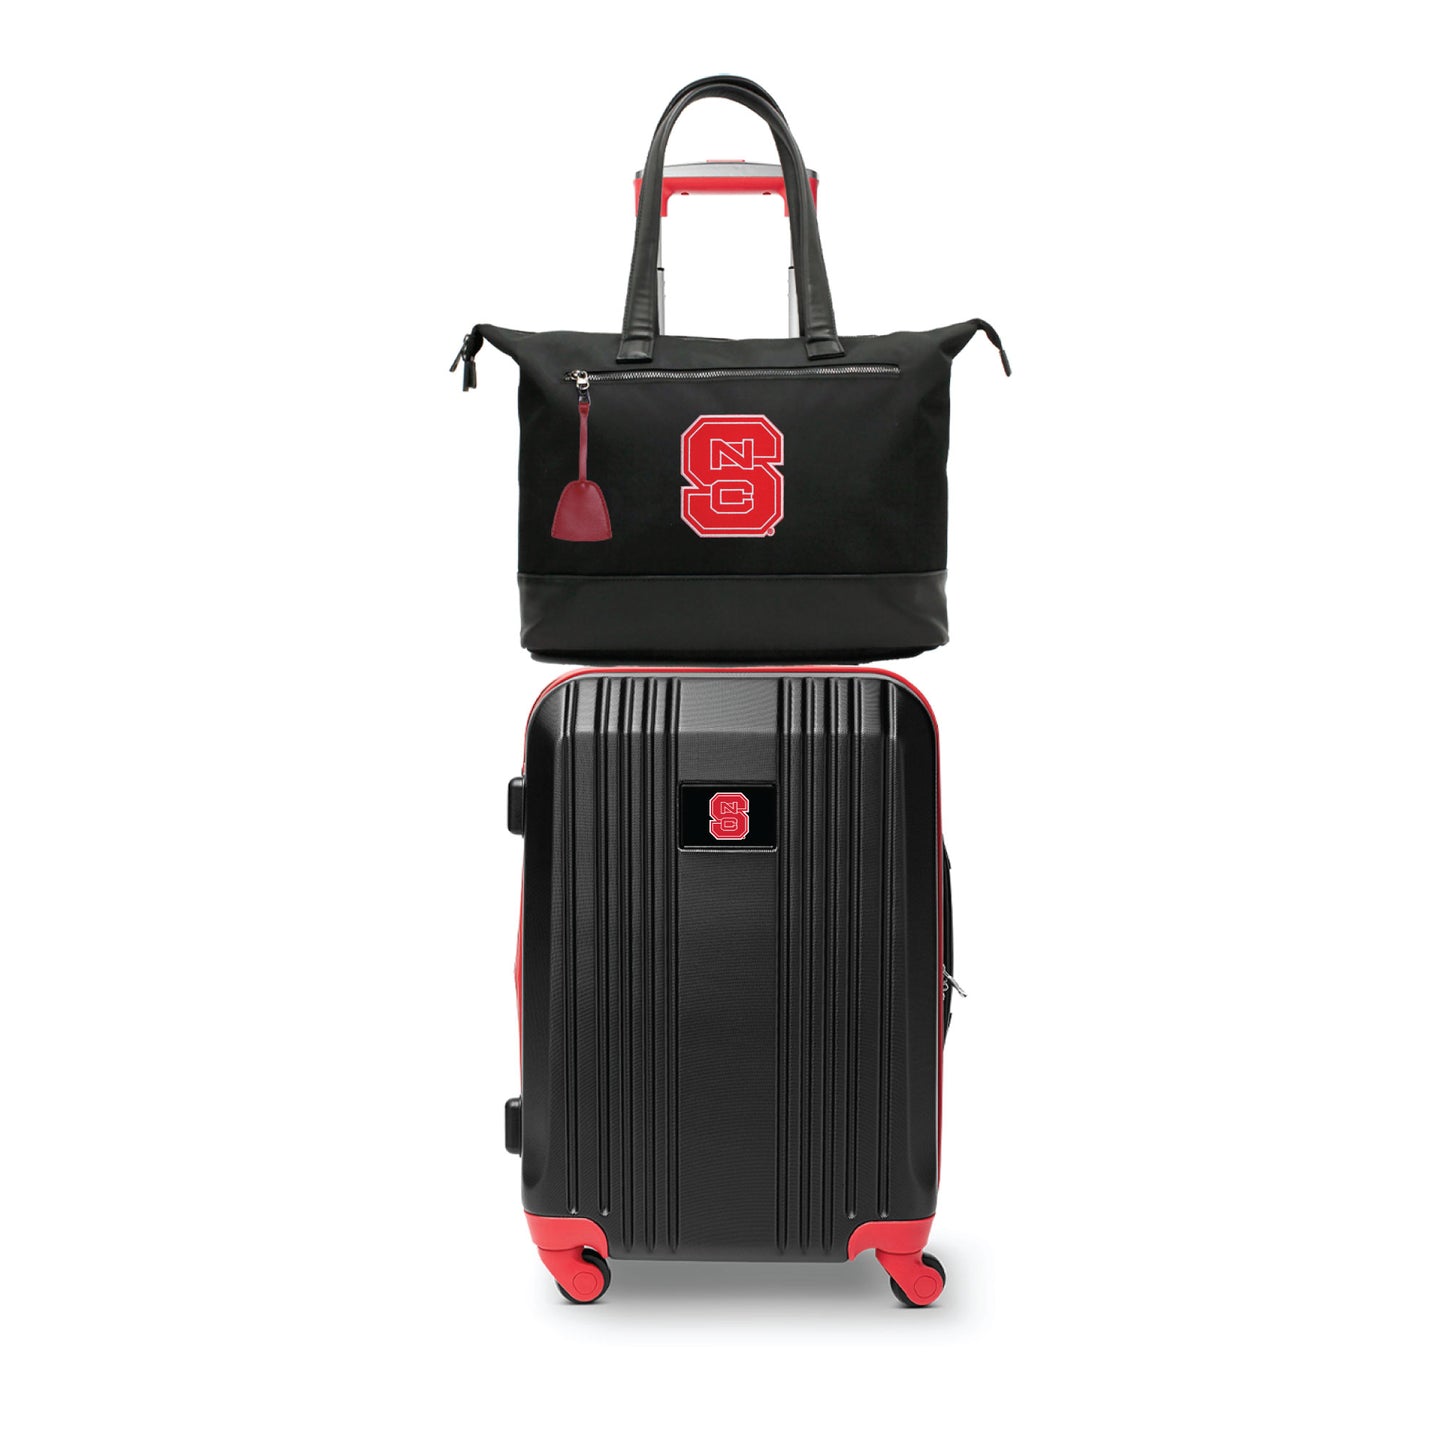 North Carolina State Wolfpack Premium Laptop Tote Bag and Luggage Set